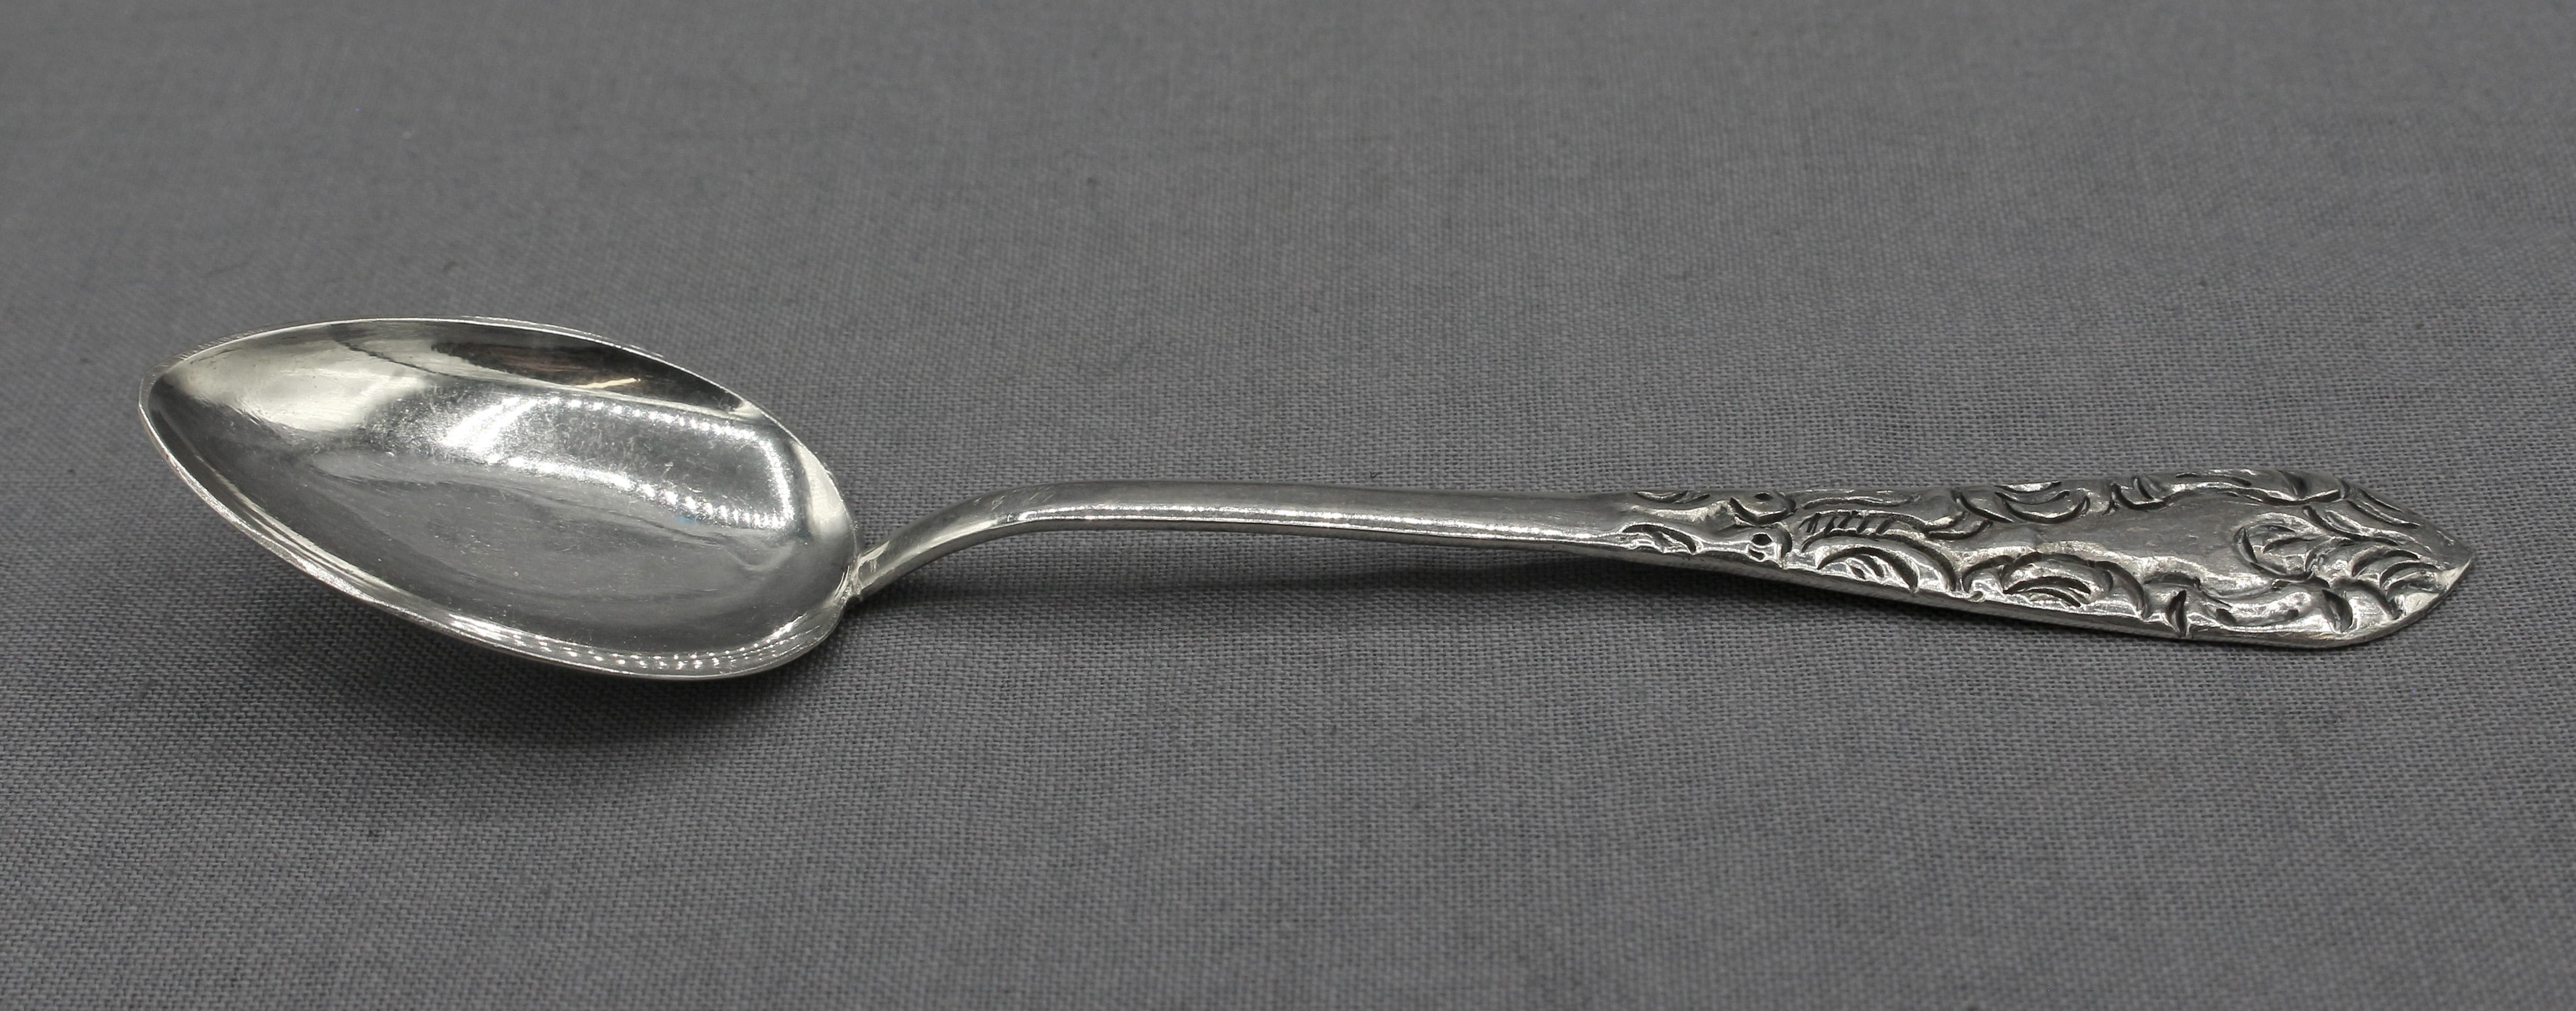 Set of 12 sterling silver demitasse spoons, Peru, c.1930s. In baroque revival taste, marked 925. Silversmith EH. Handworked designs. 4.10 troy oz.
4.5